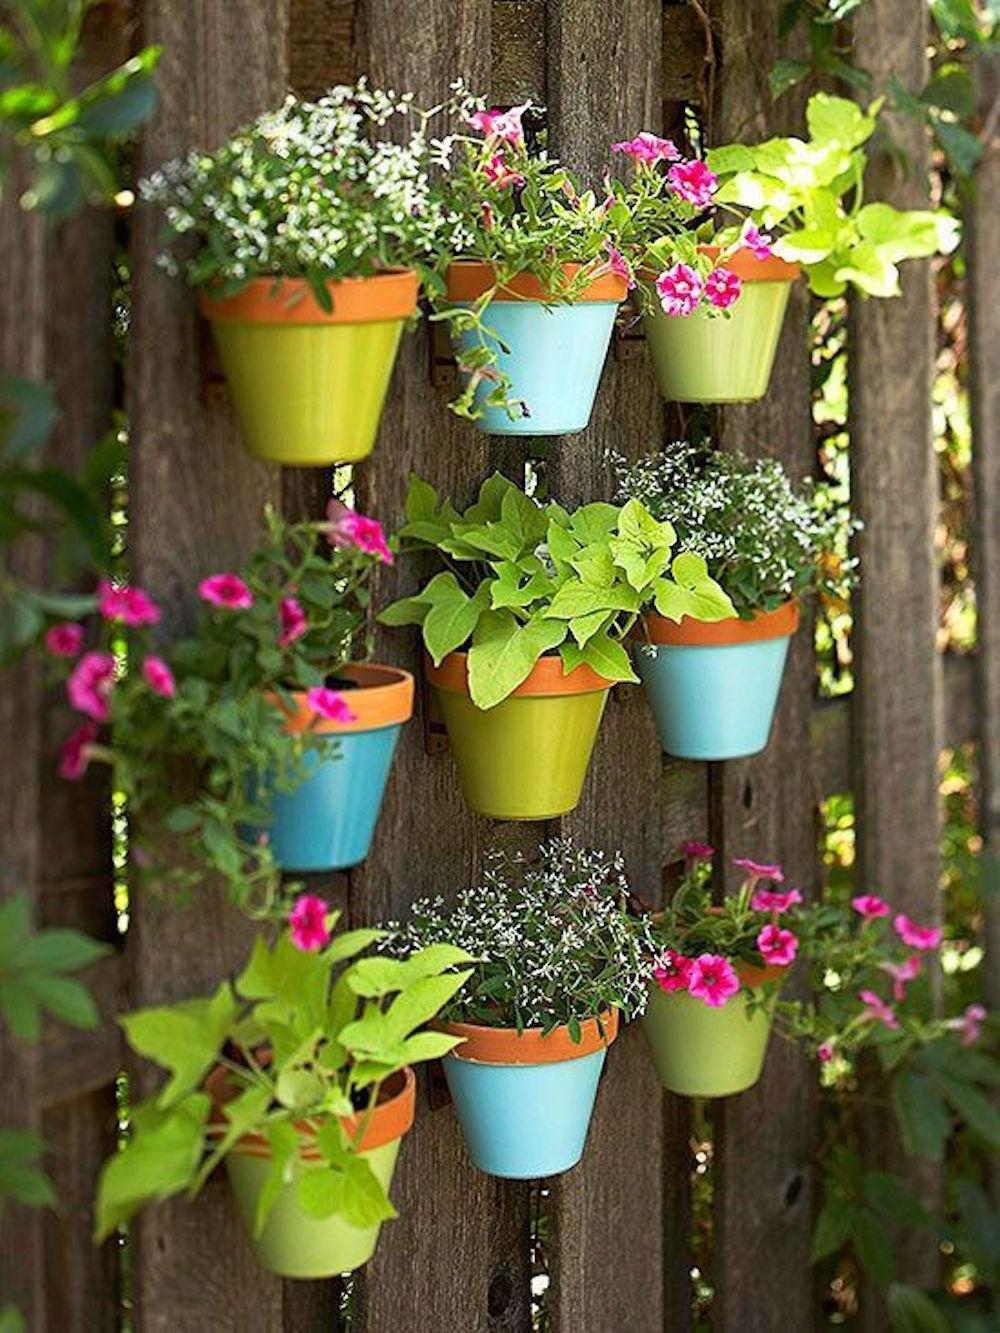 Small plastic flower pots